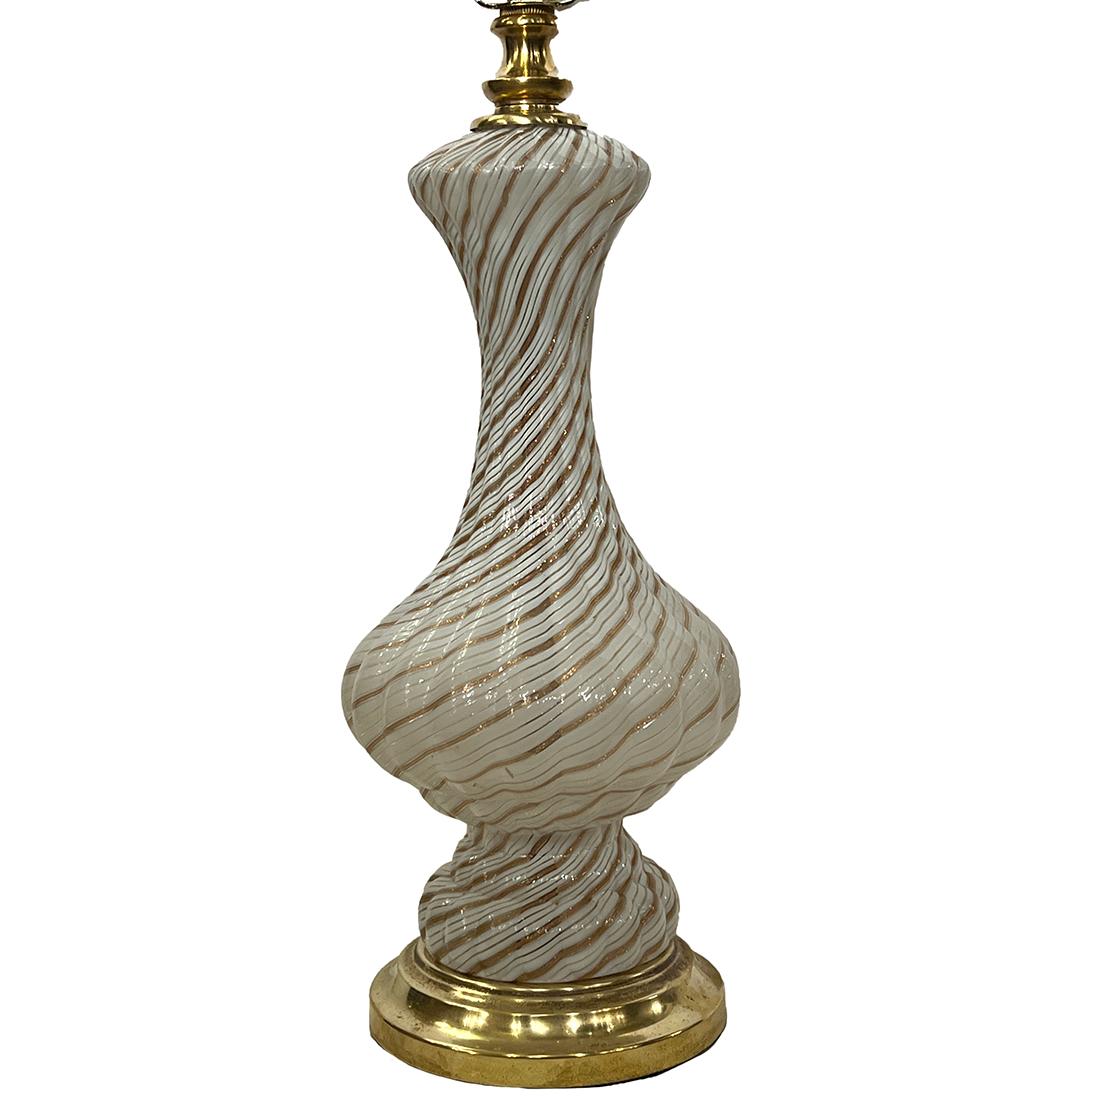 A single circa 1920's Venetian blown ribbon glass table lamp.

Measurements:
Height of body: 13